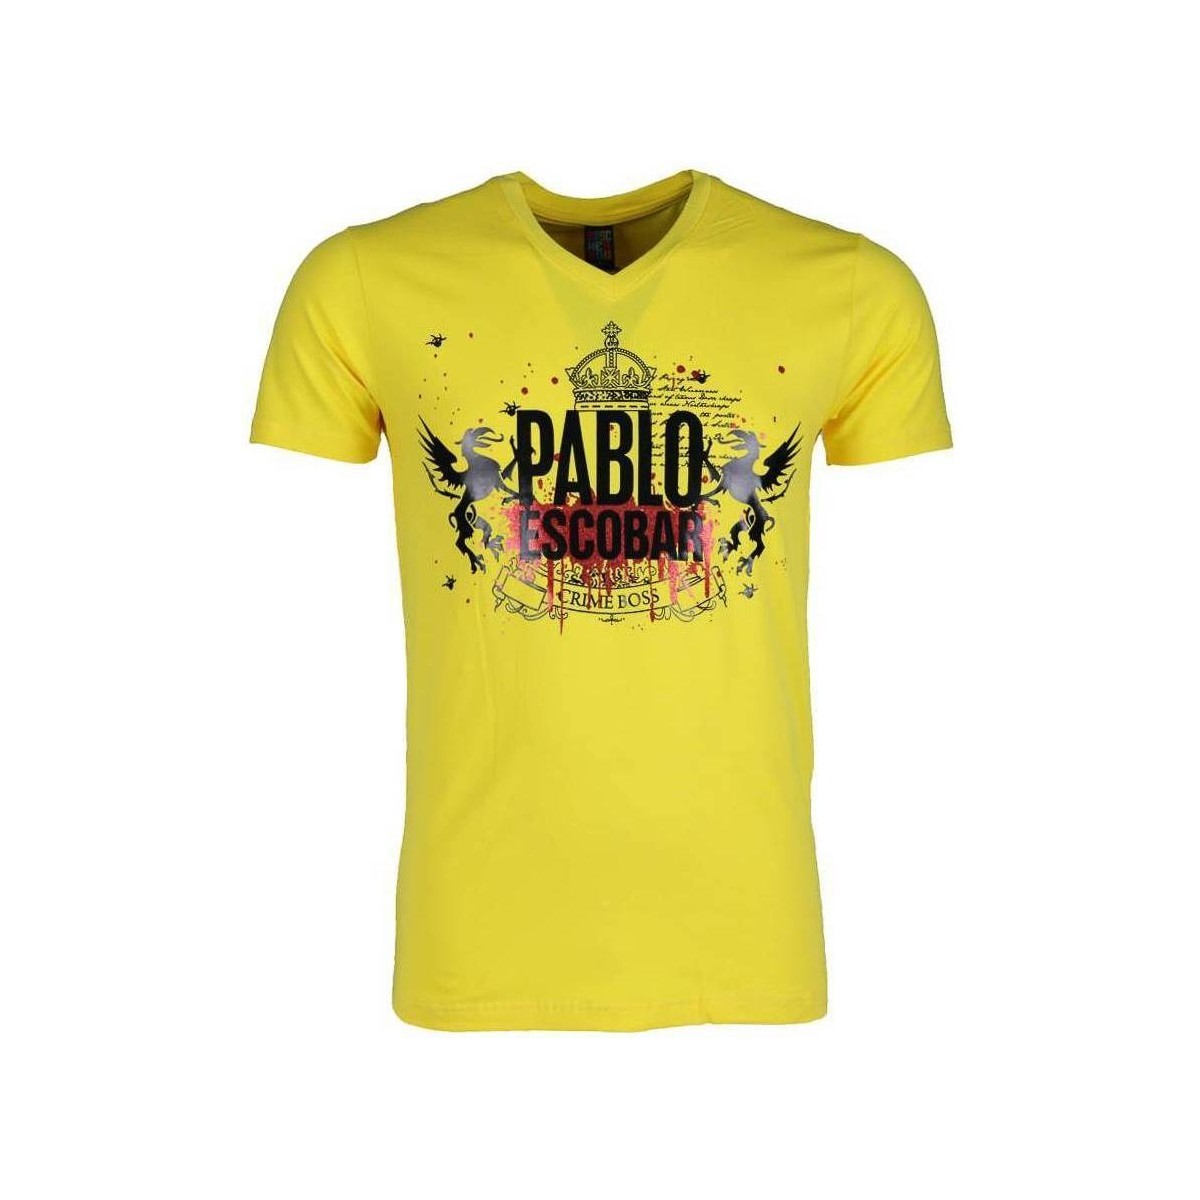 textil Herr T-shirts Local Fanatic Pablo Escobar Crime Boss Gul